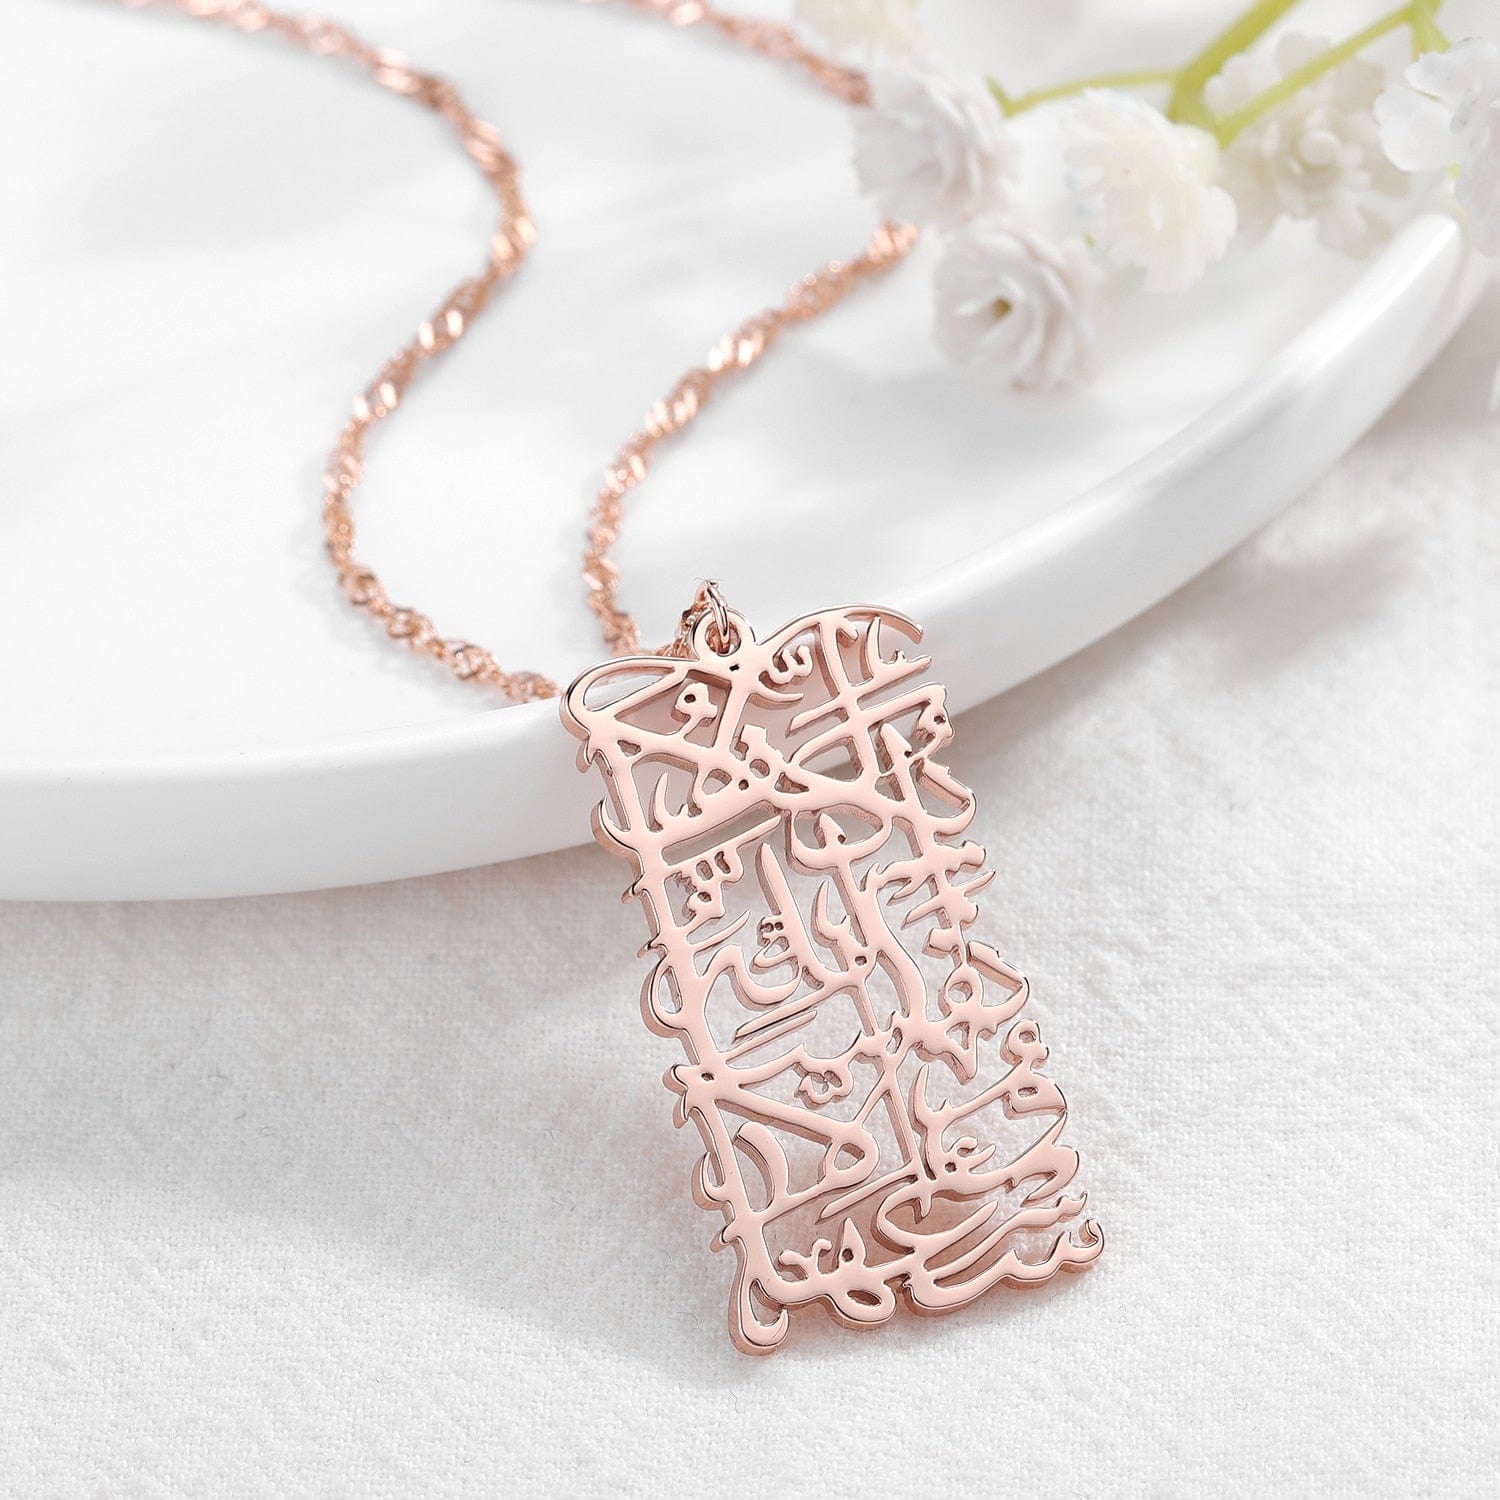 VVS Jewelry hip hop jewelry Islamic Arabic Calligraphy Necklace